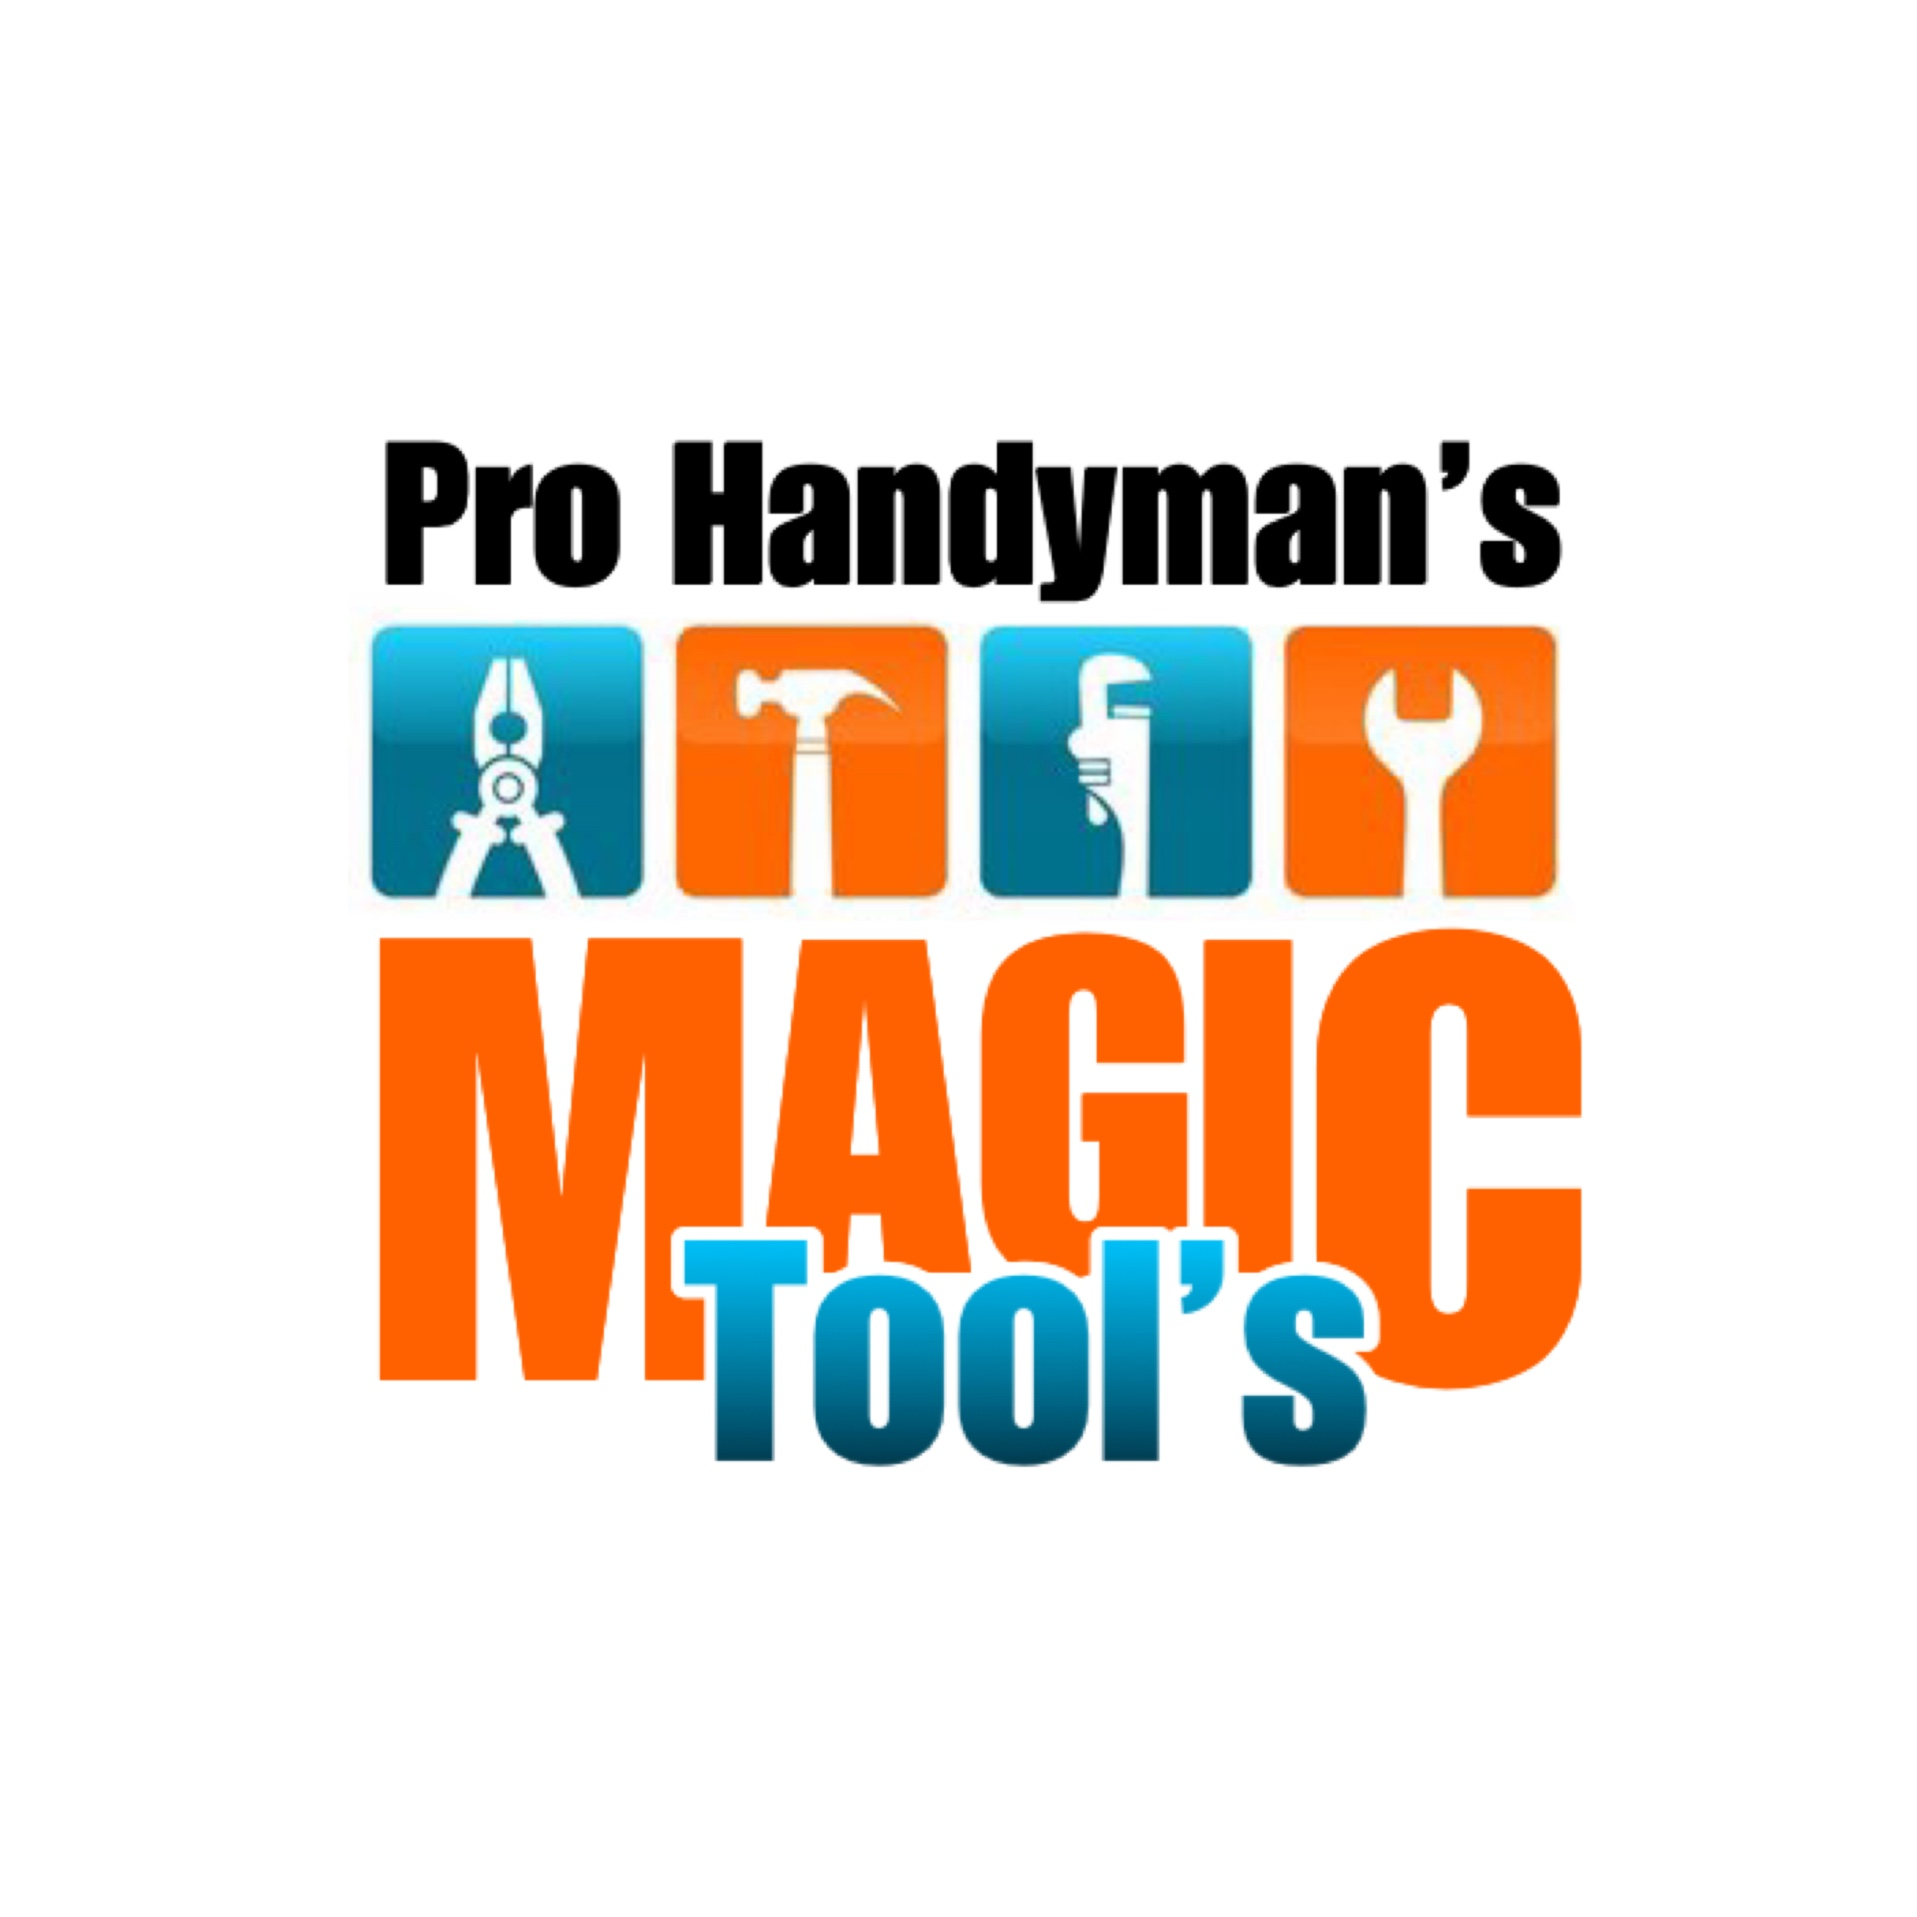 Magic Tools Pro Handyman’s 's logo